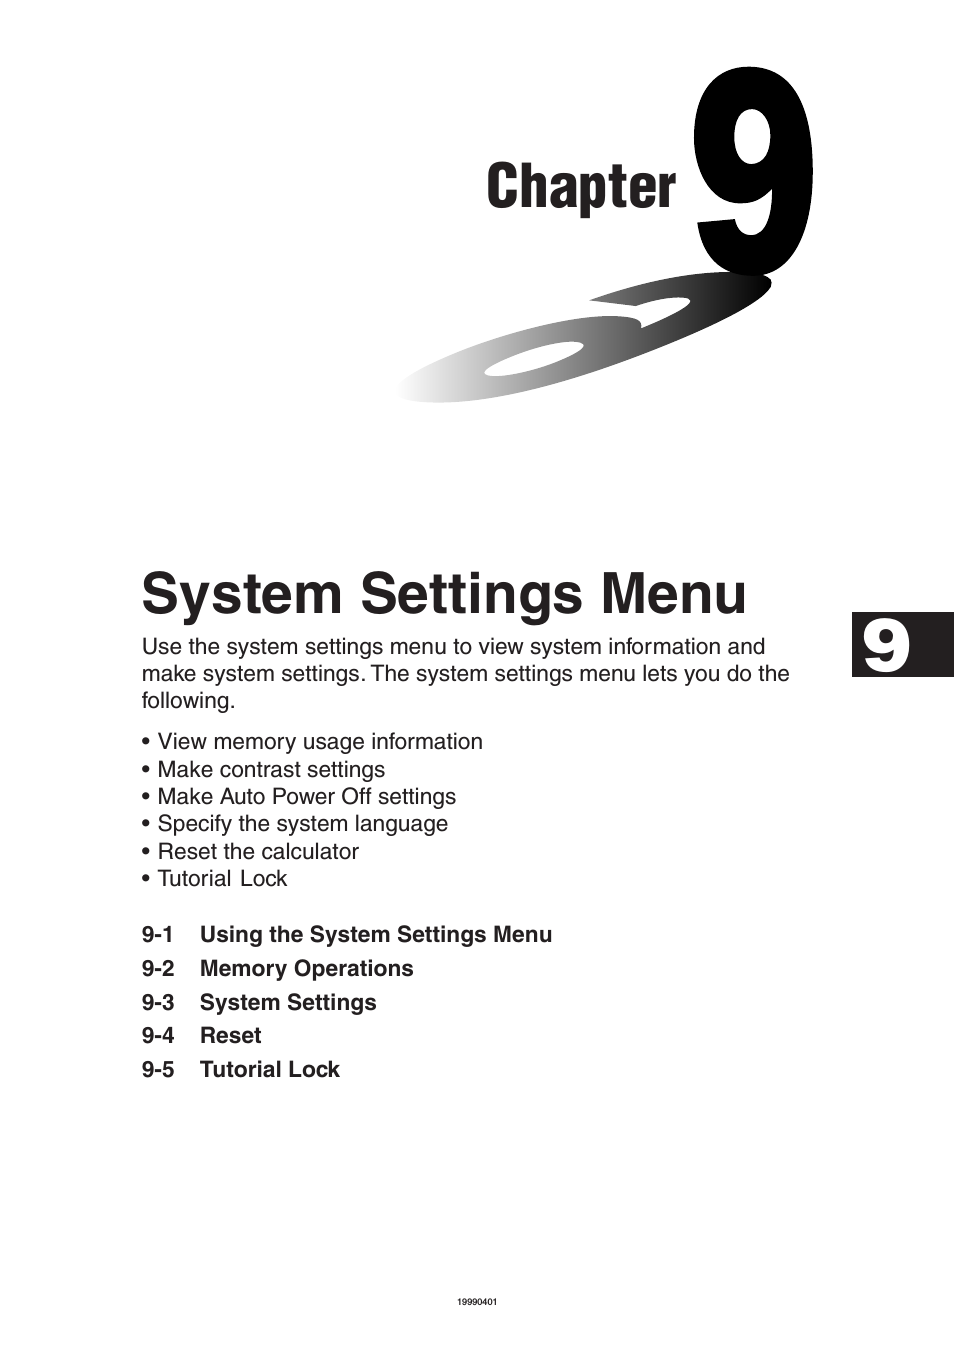 ALGEBRA FX 2.0 PLUS System Settings Menu